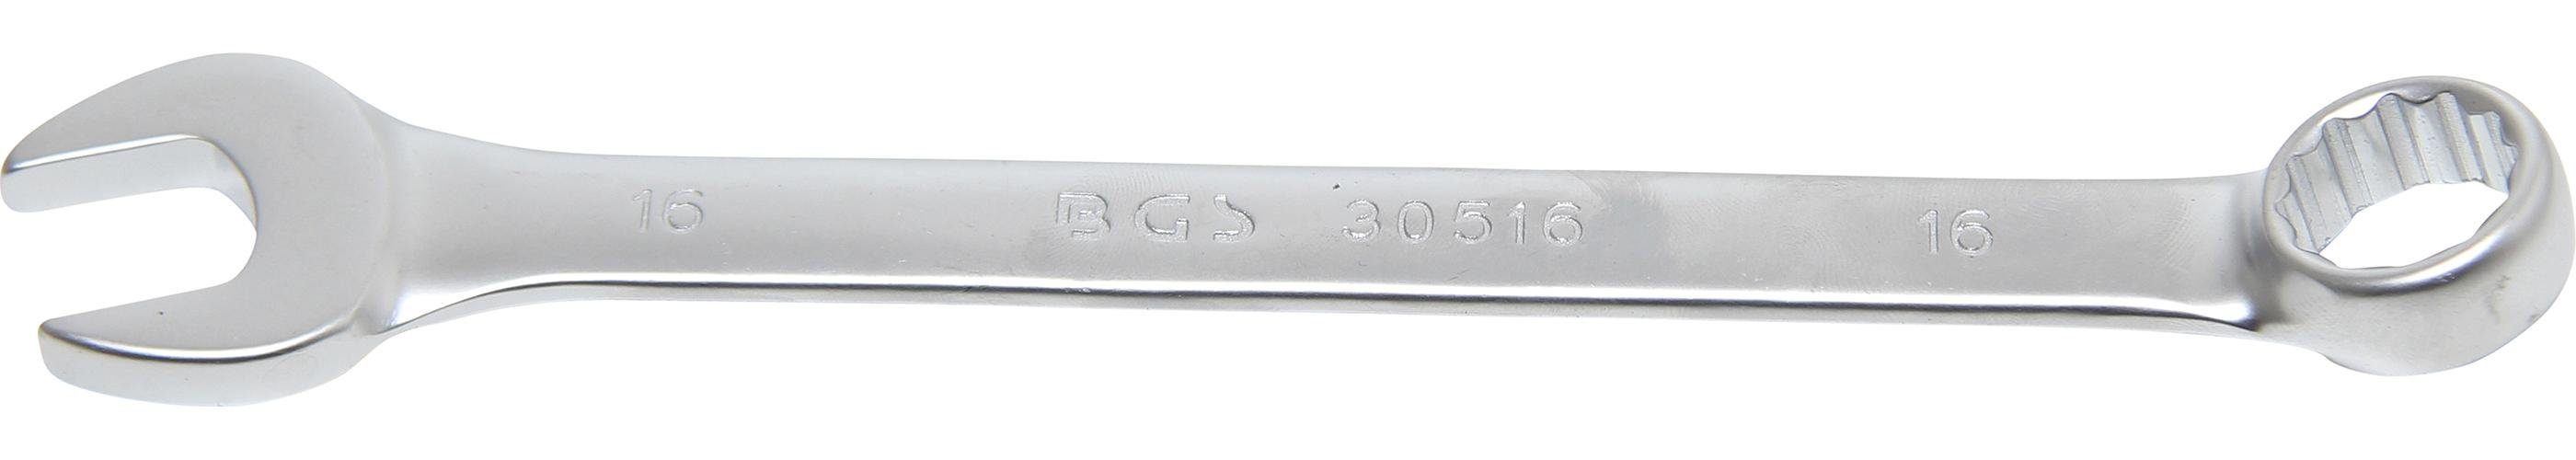 mm Maul-Ringschlüssel, technic Maulschlüssel 16 BGS SW